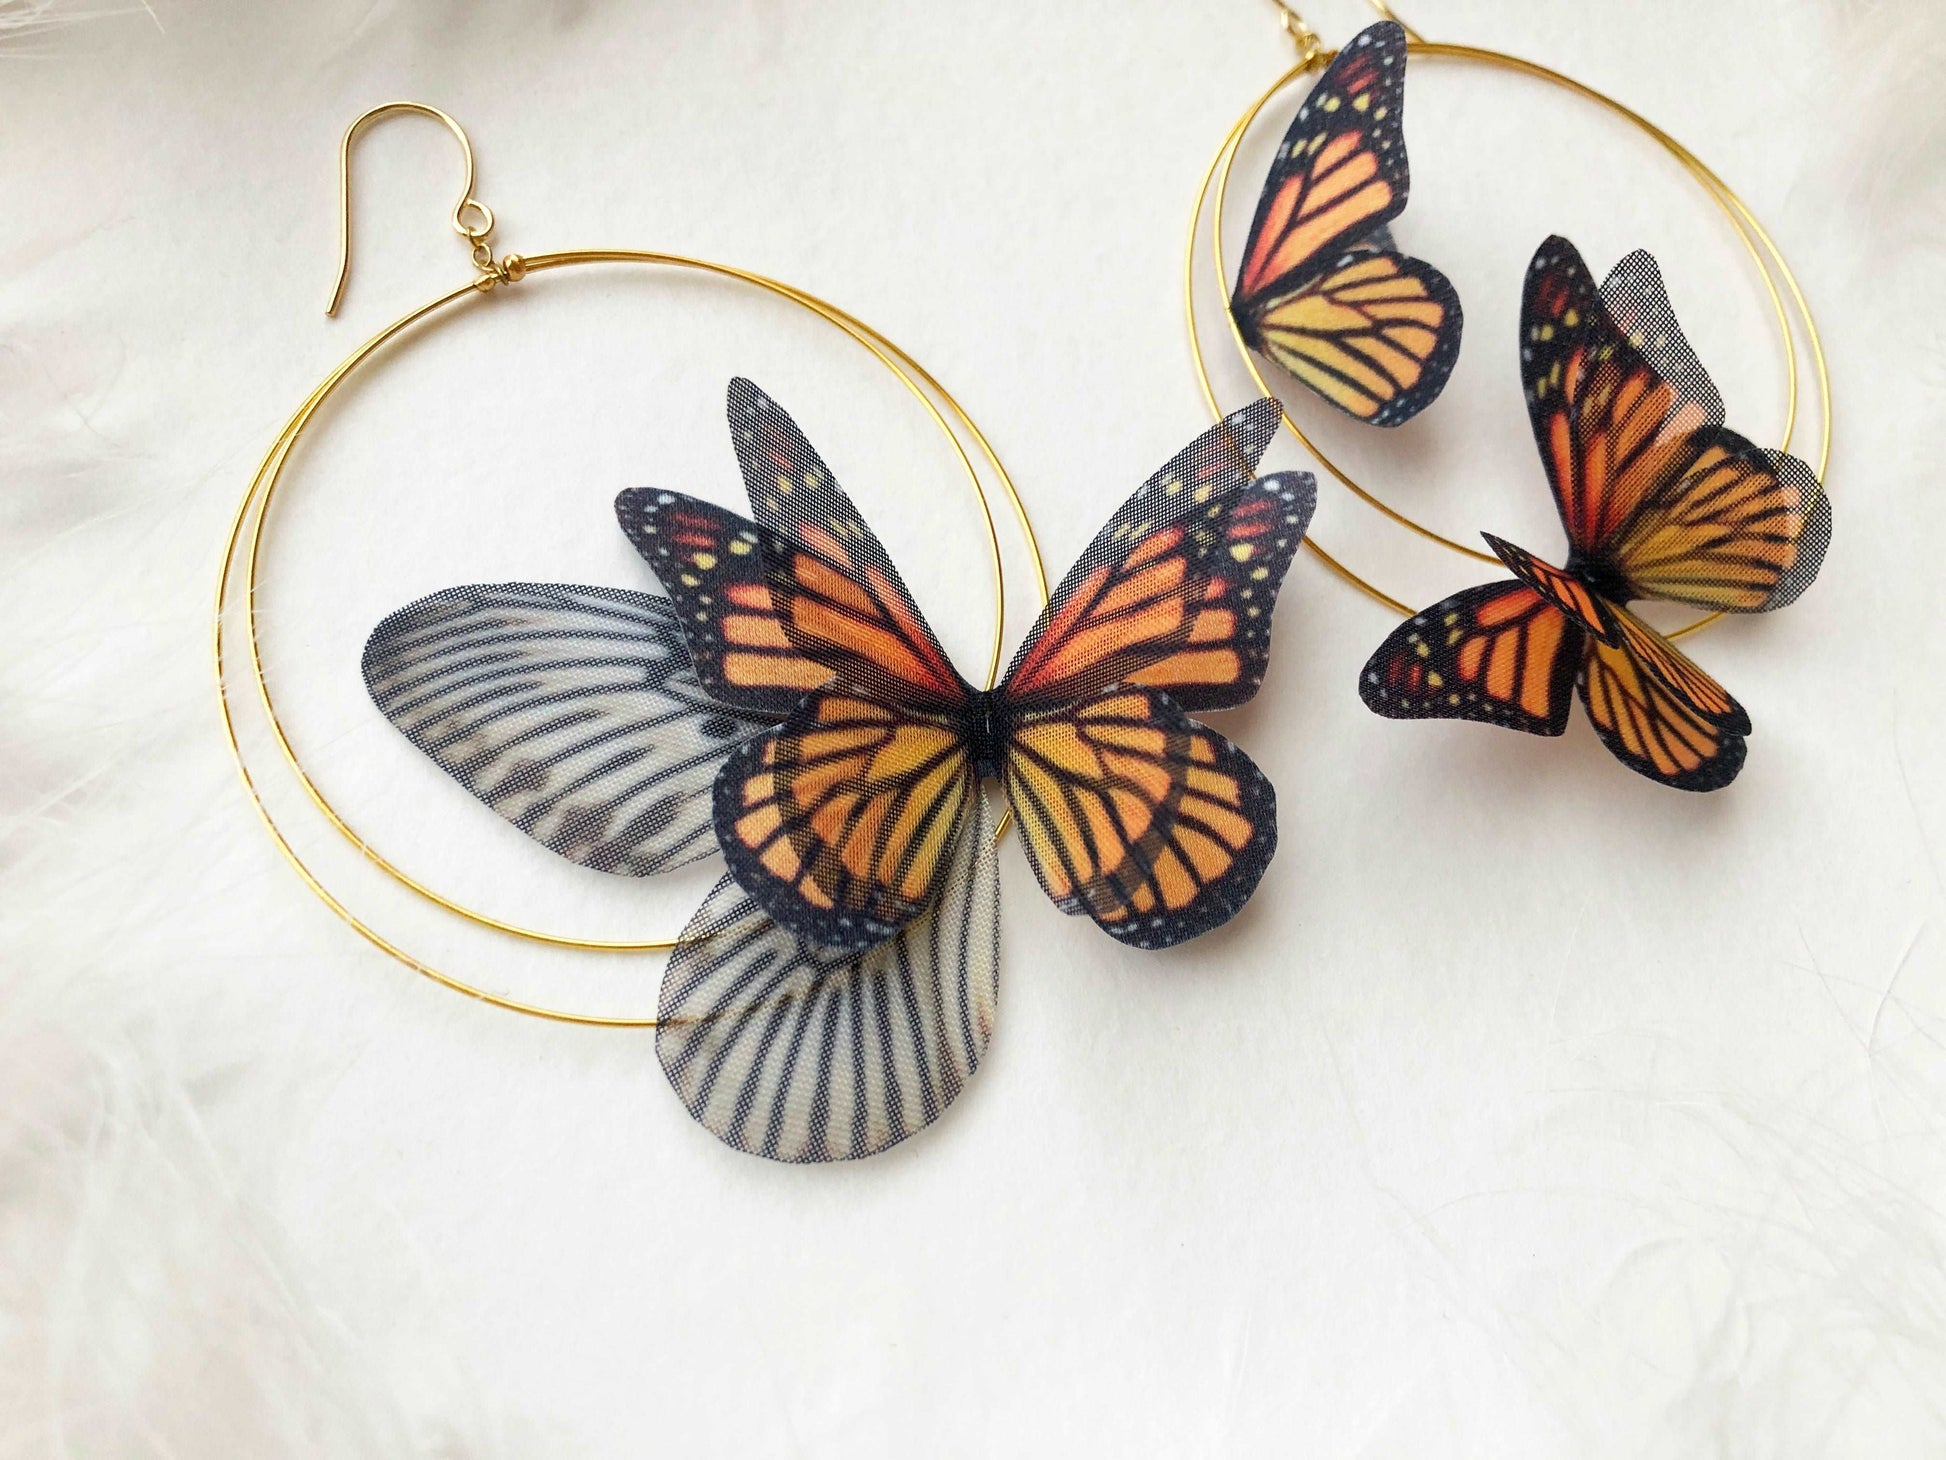 Monarch Butterfly Hoop Earrings from the side, showcasing the unique hoop shape